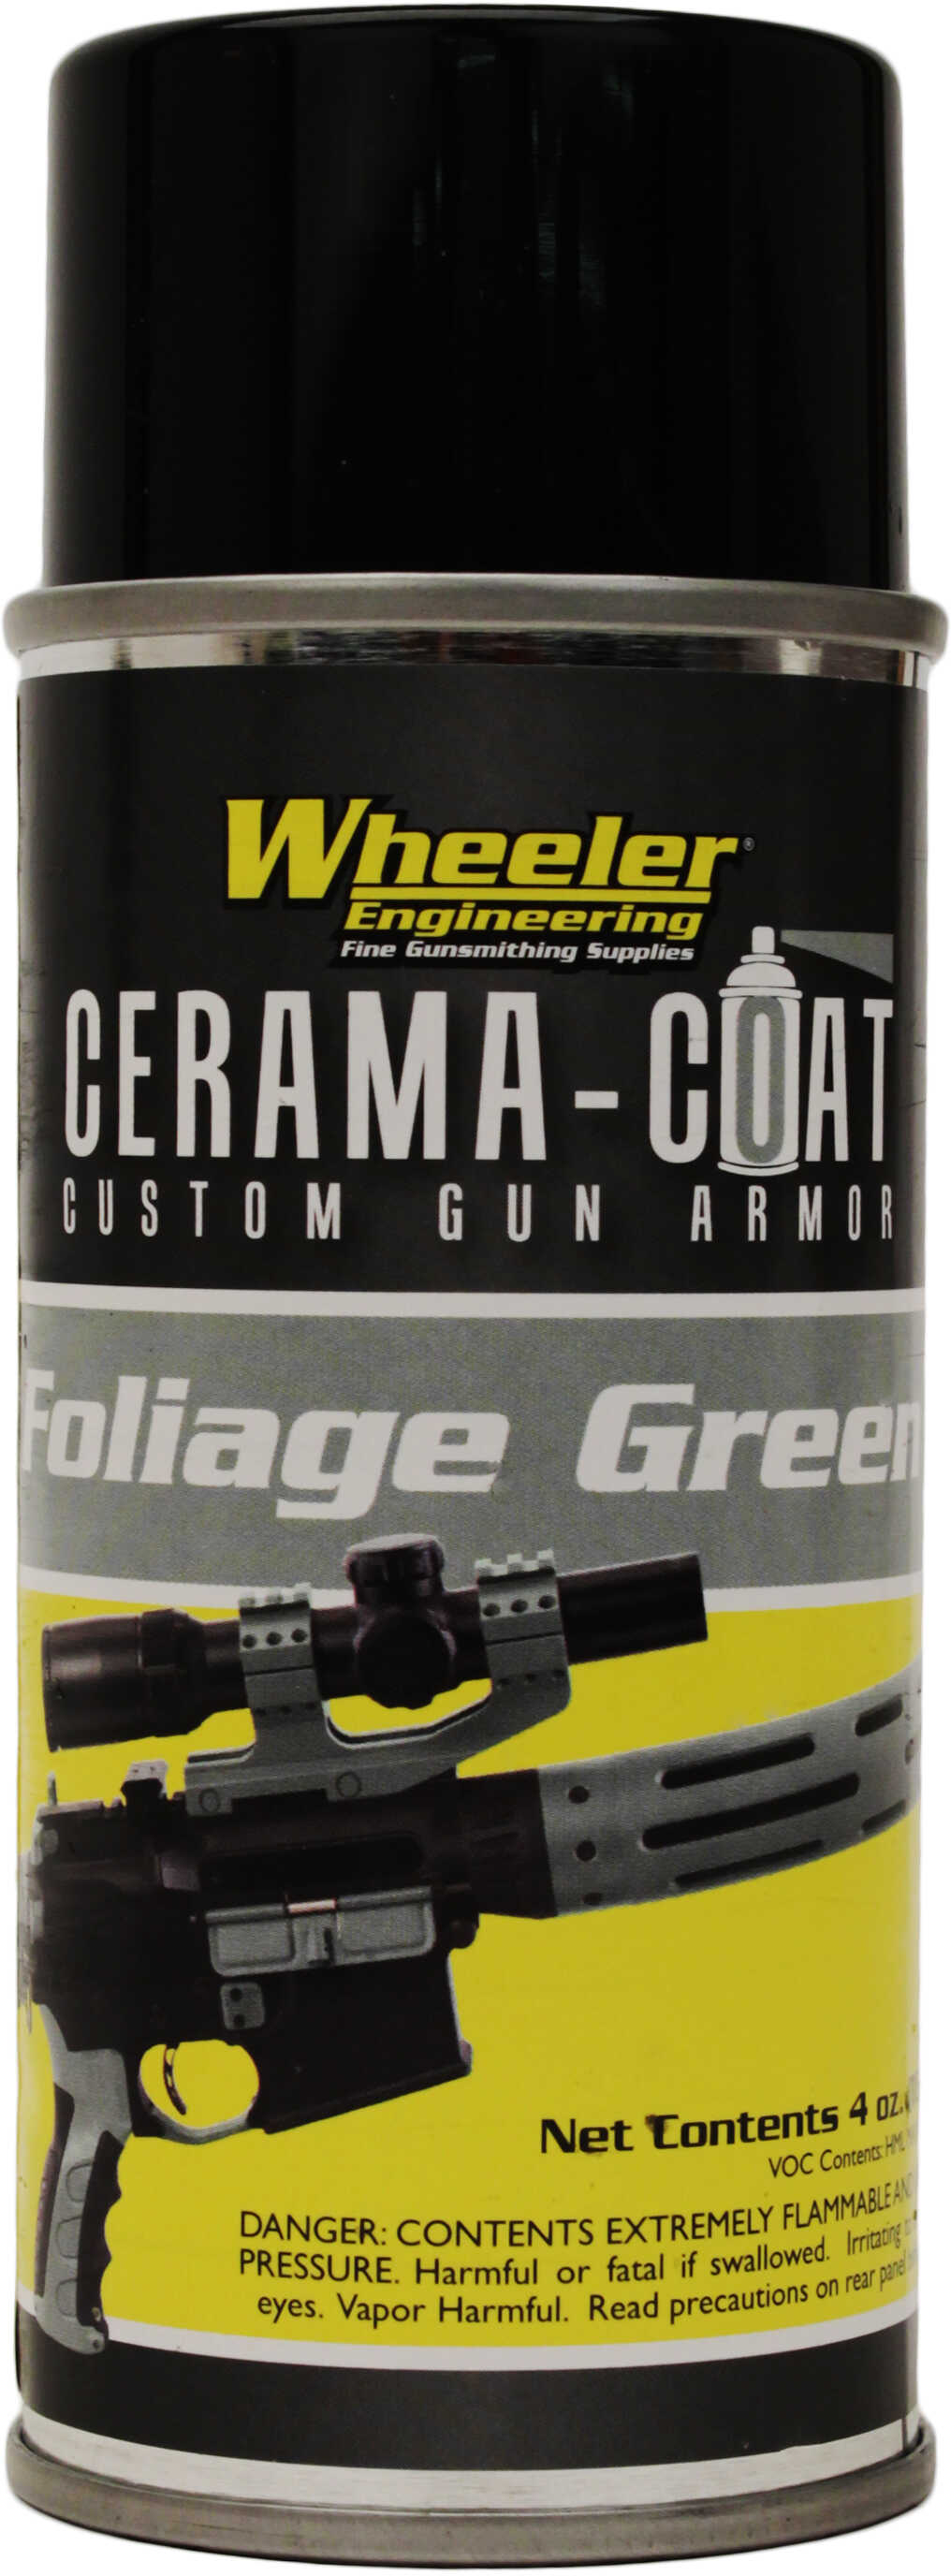 Cerama-Coat Firearm Finish, Foliage Green Md: 567843